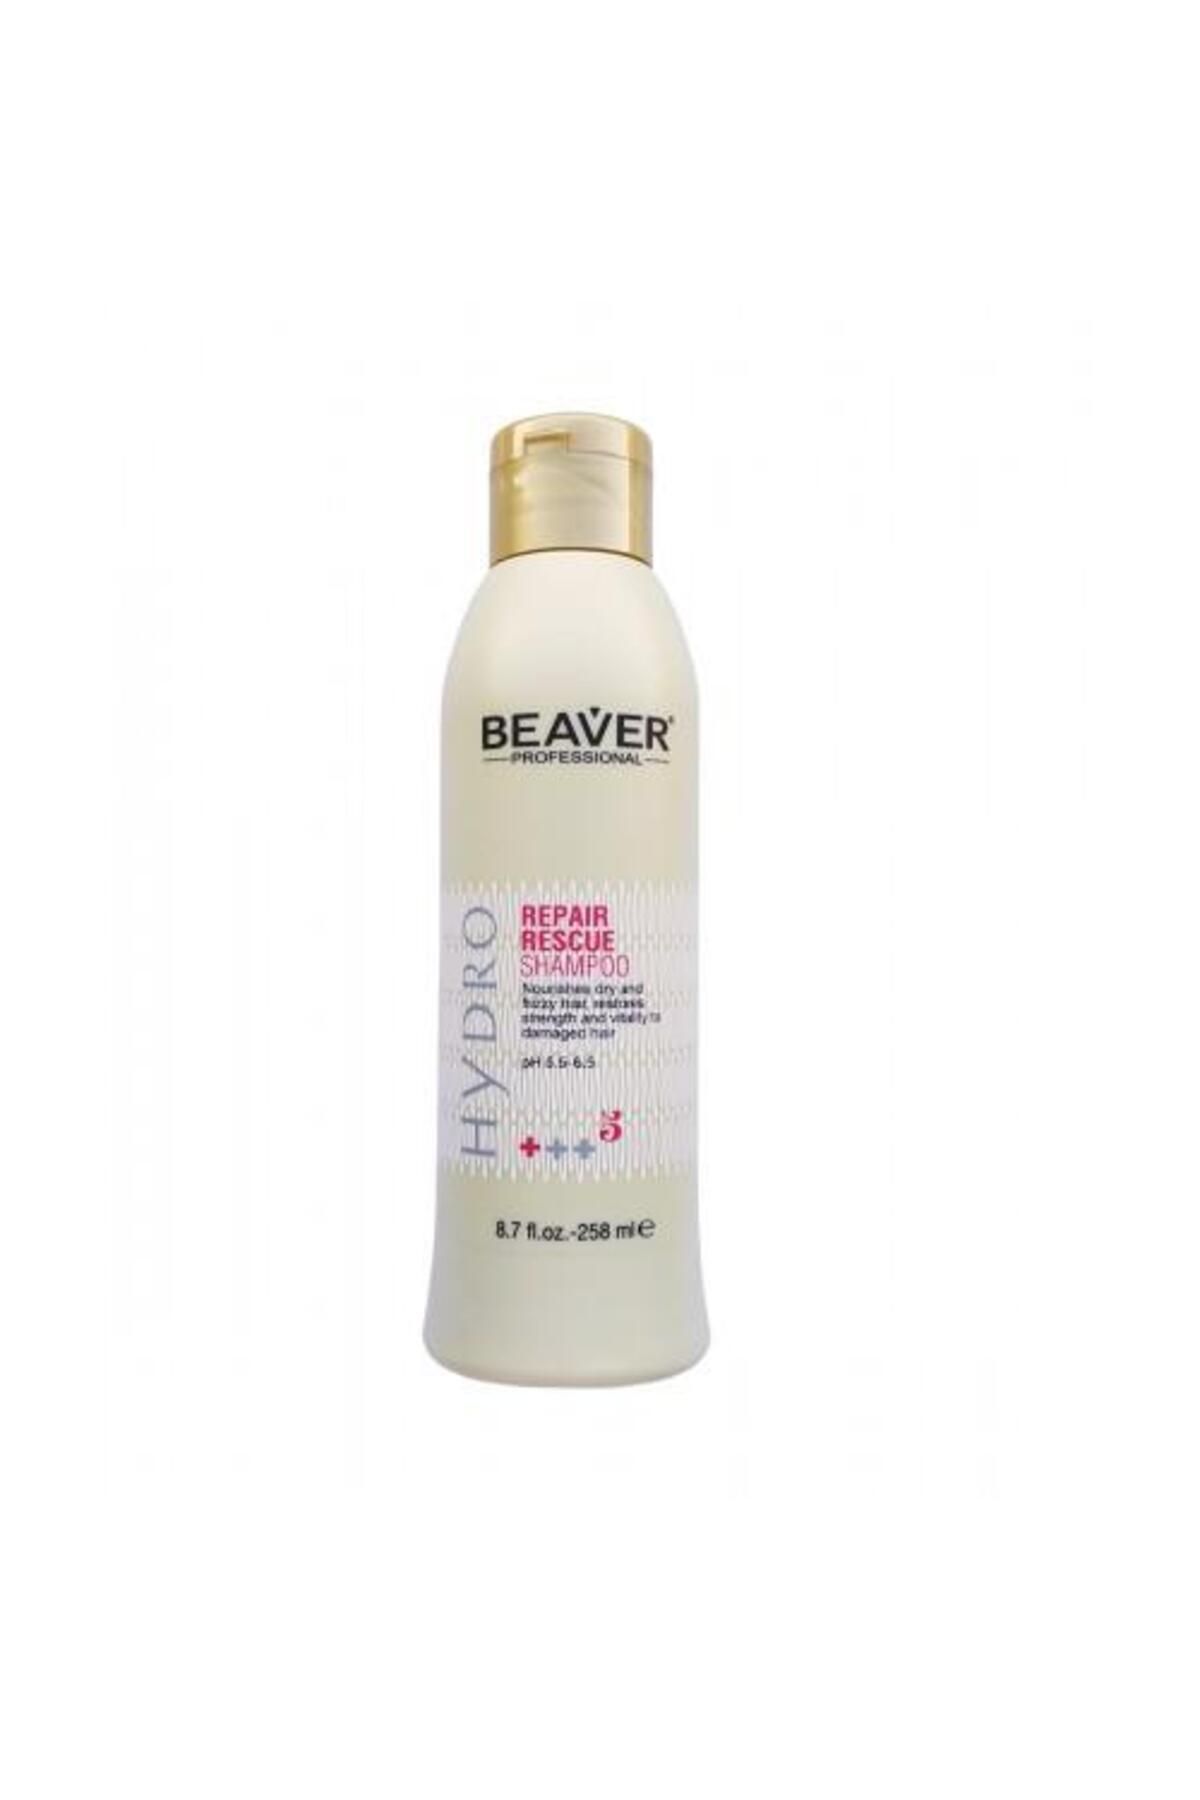 BEAVER PROFESSIONAL Beaver Reapir Rescue Shampoo 258 ml RR-01